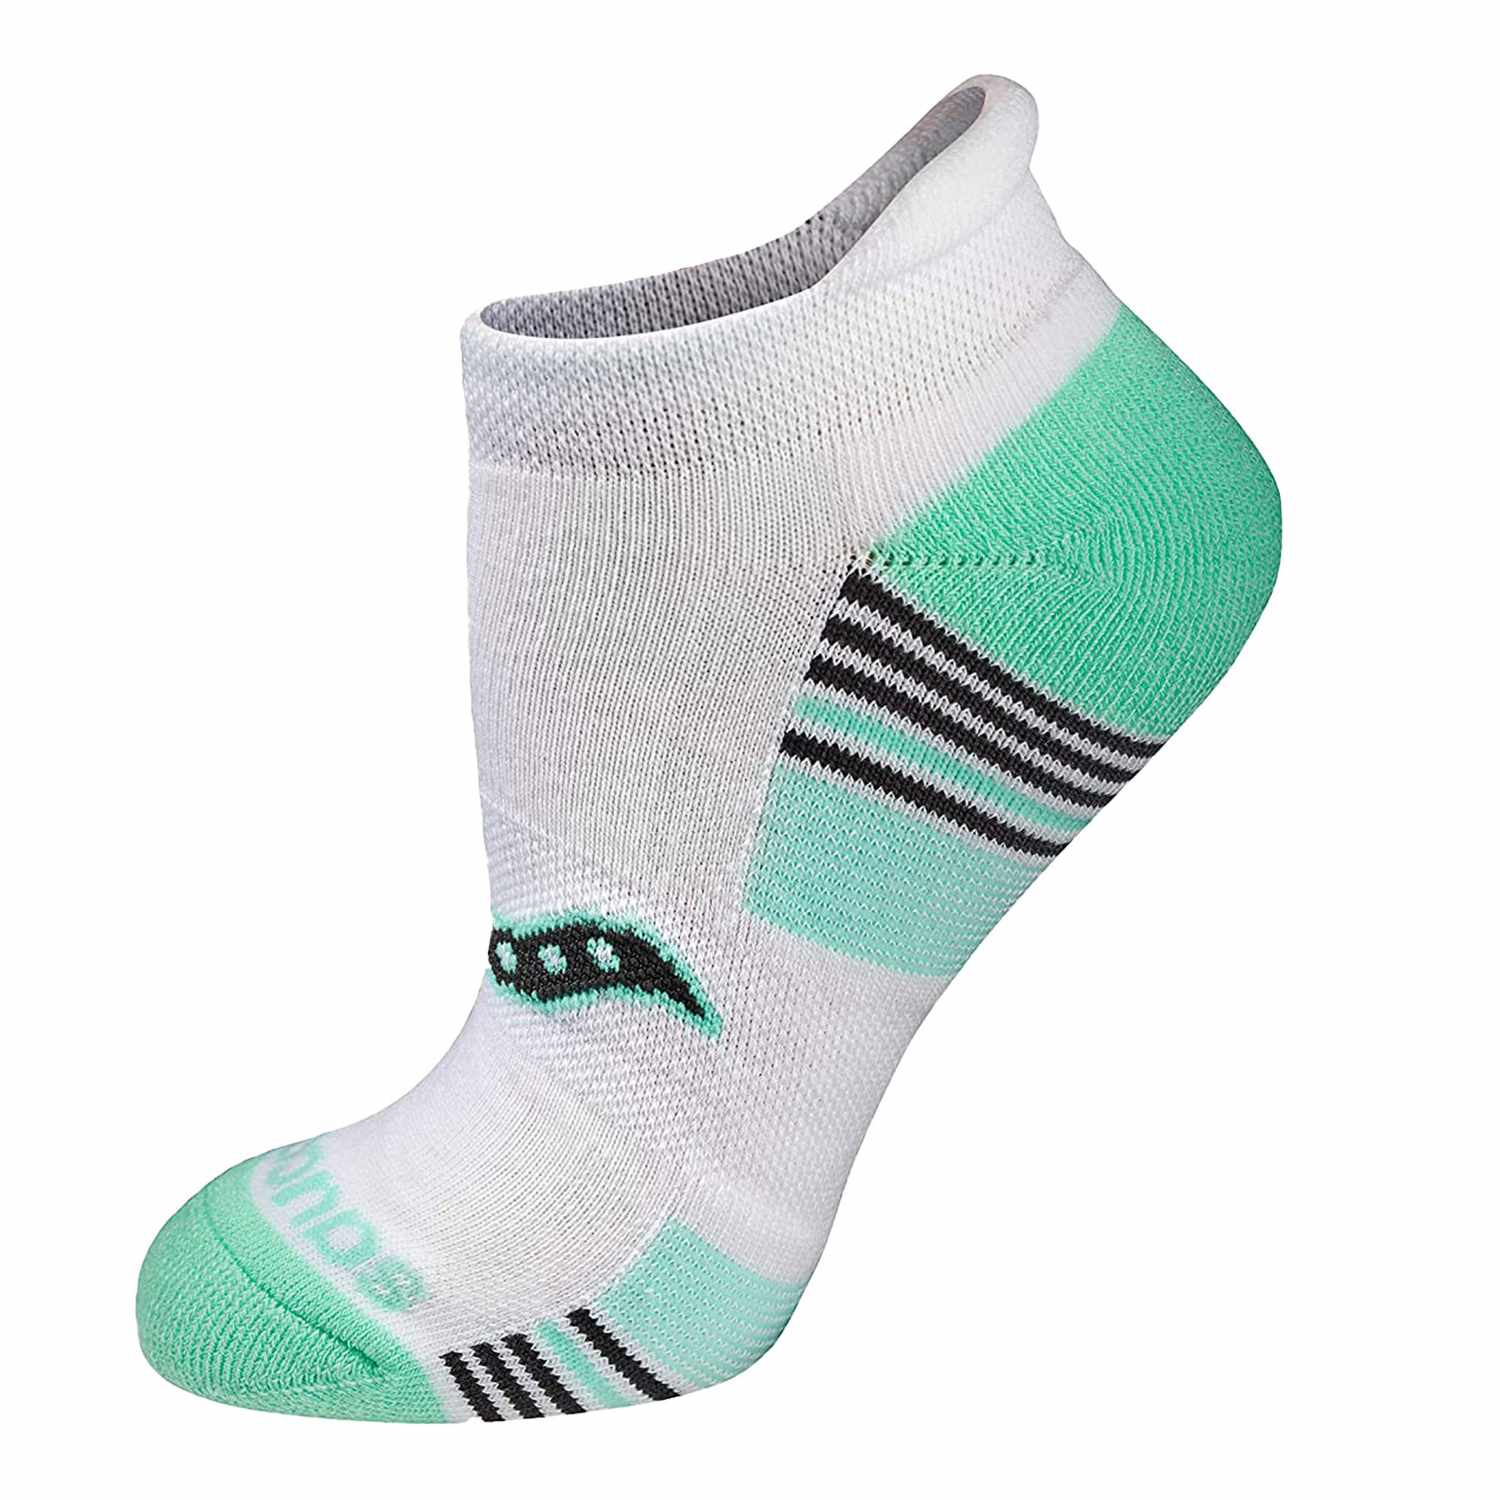 Bad Brew Rhino Socks SS anklet sports socks XL sand/white